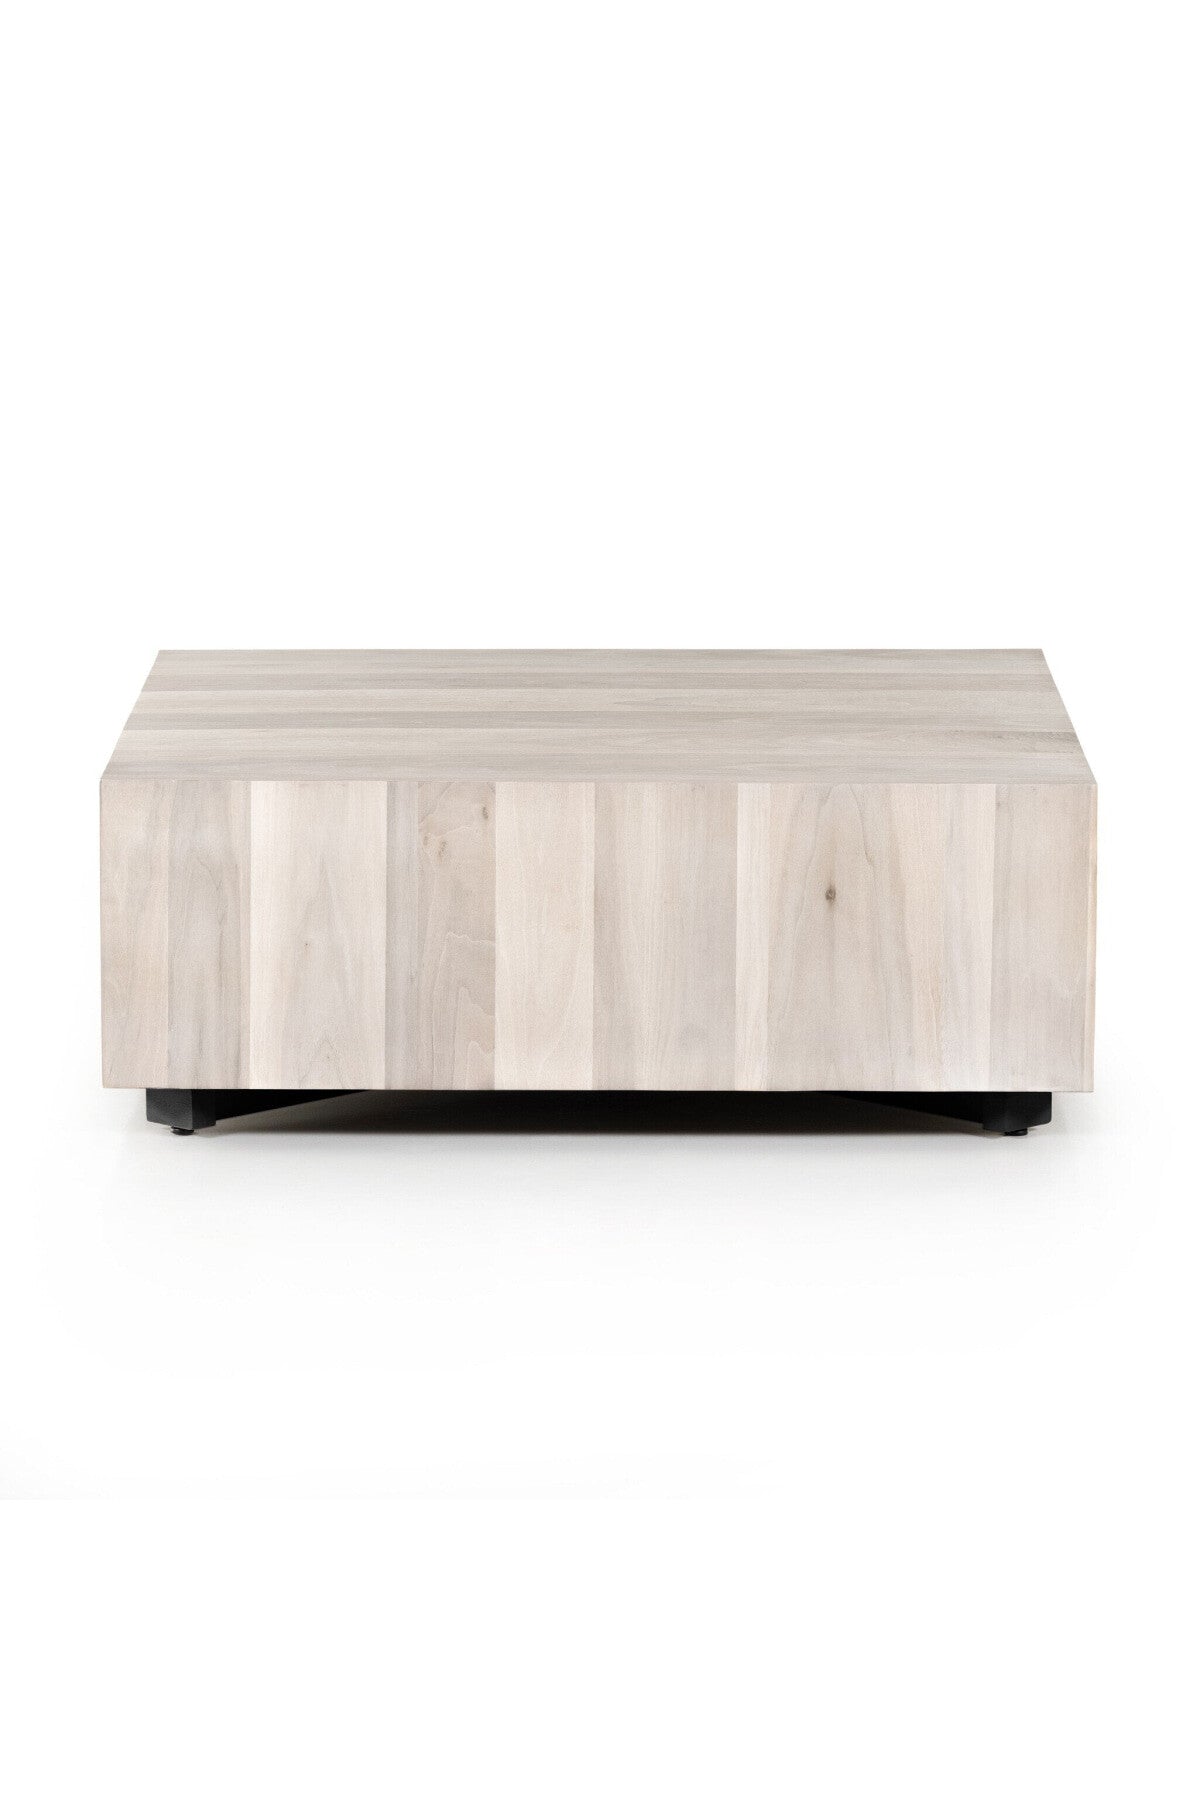 Cami Coffee Table - Open Box